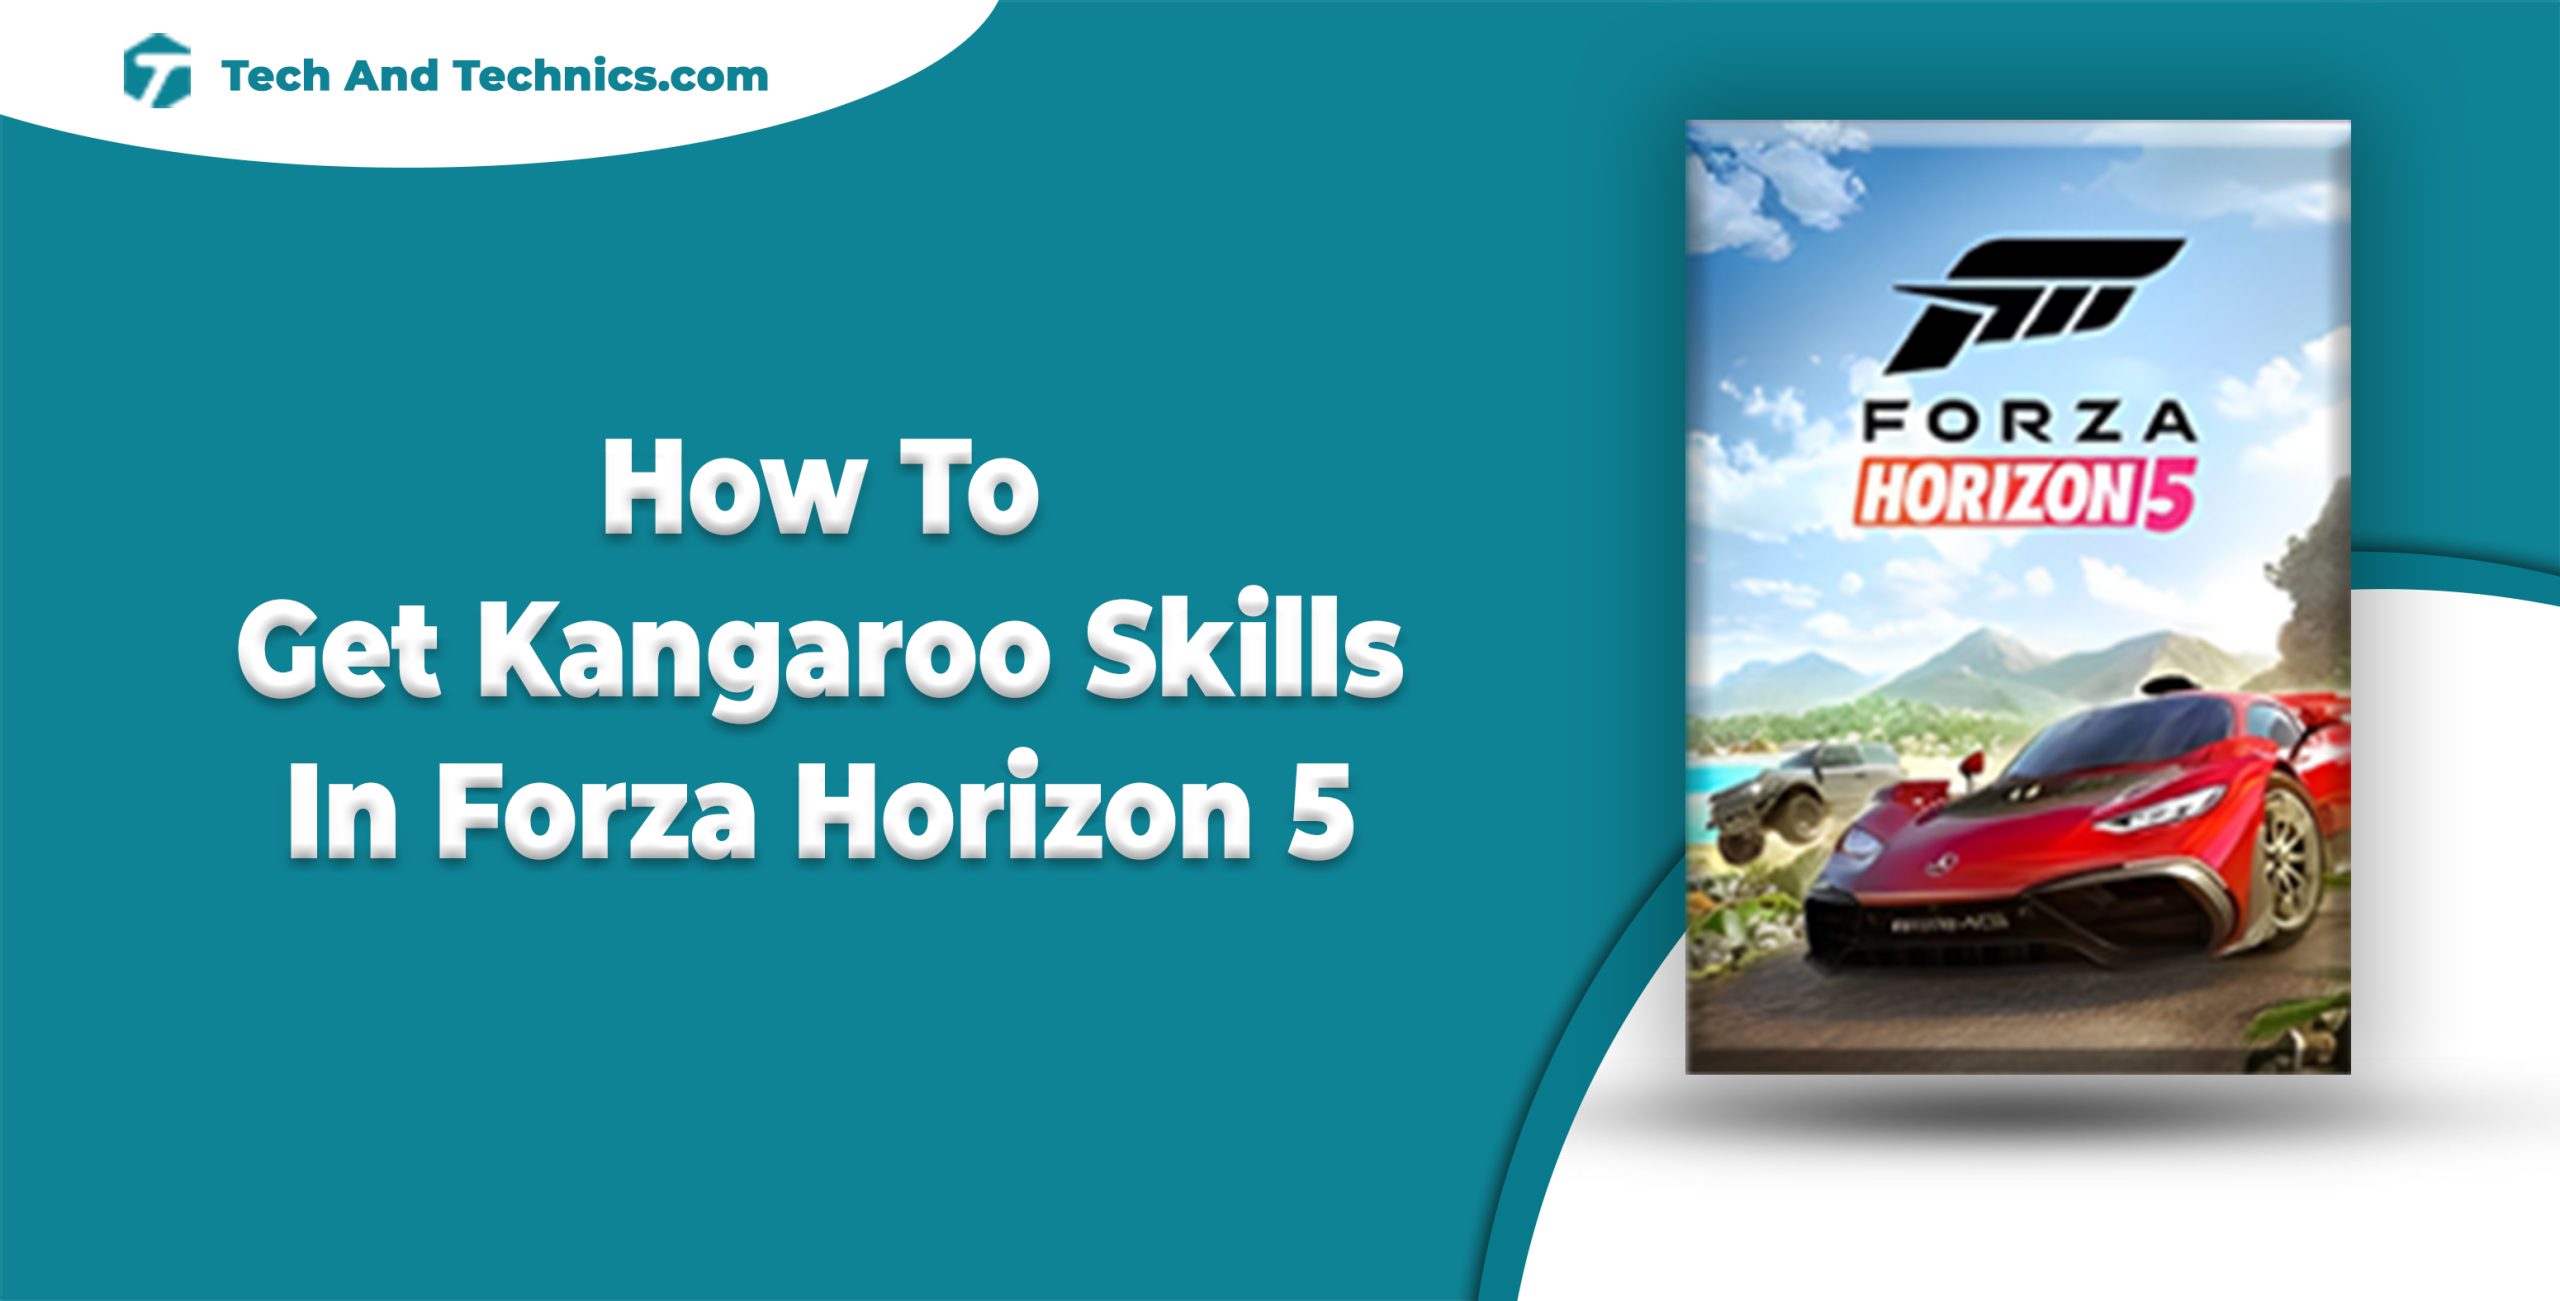 How To Get Kangaroo Skills In Forza Horizon 5 (Guide)